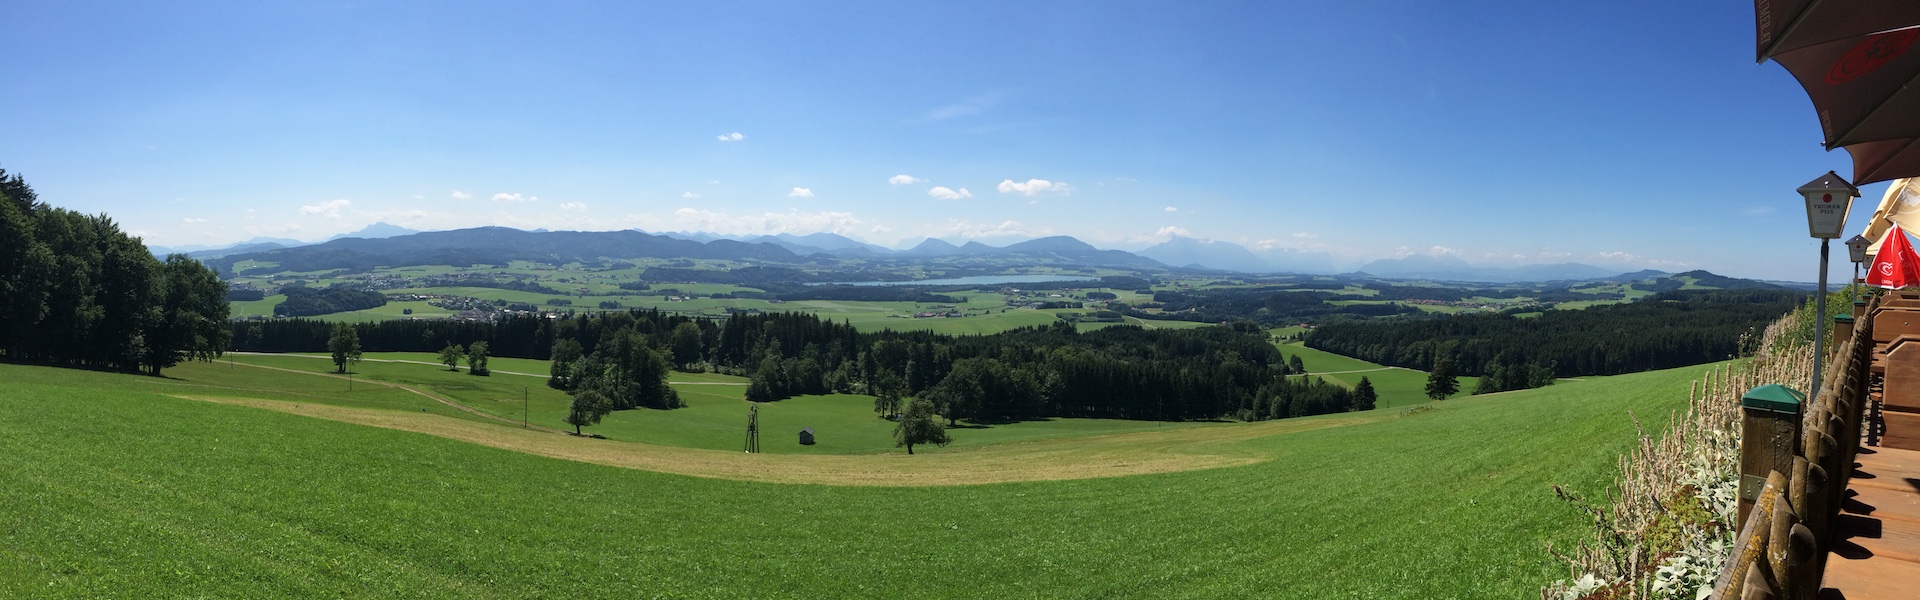 salzburg-panorama-1920x600